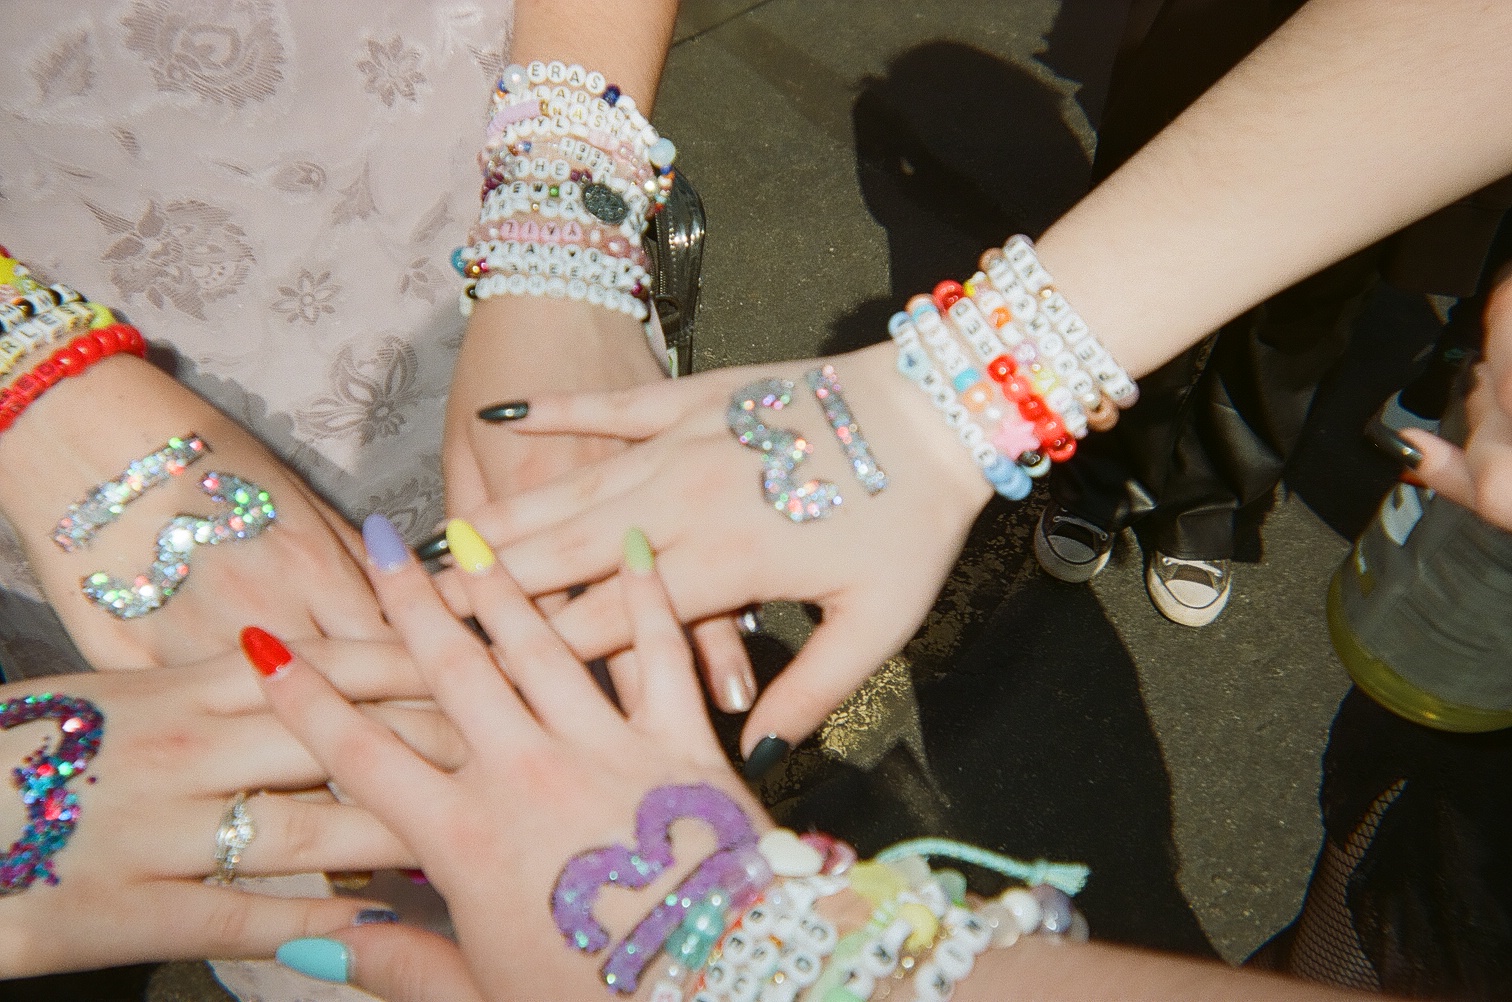 Let's make friendship bracelets for The Eras Tour! // Taylor Swift